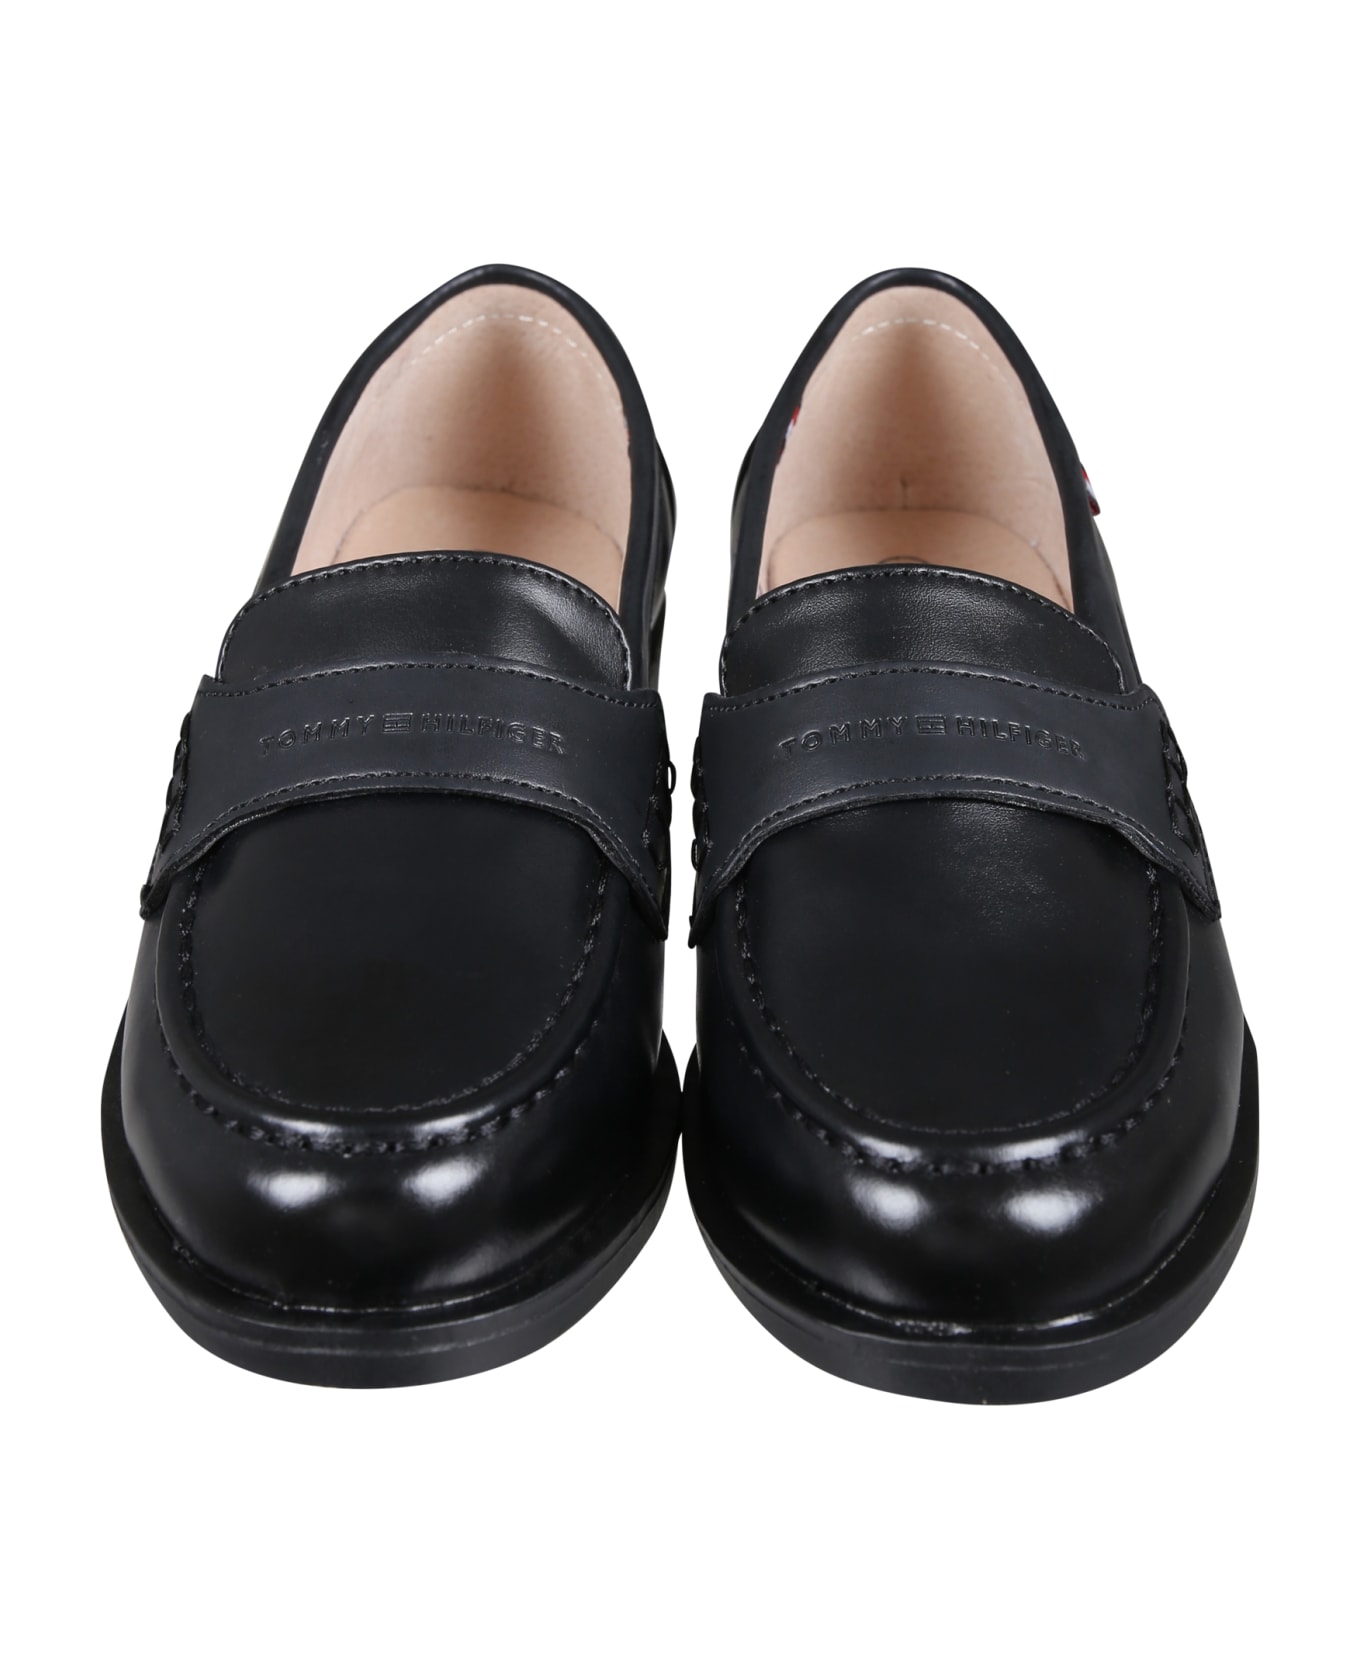 Tommy Hilfiger Black Loafers For Boy With Logo - Black シューズ